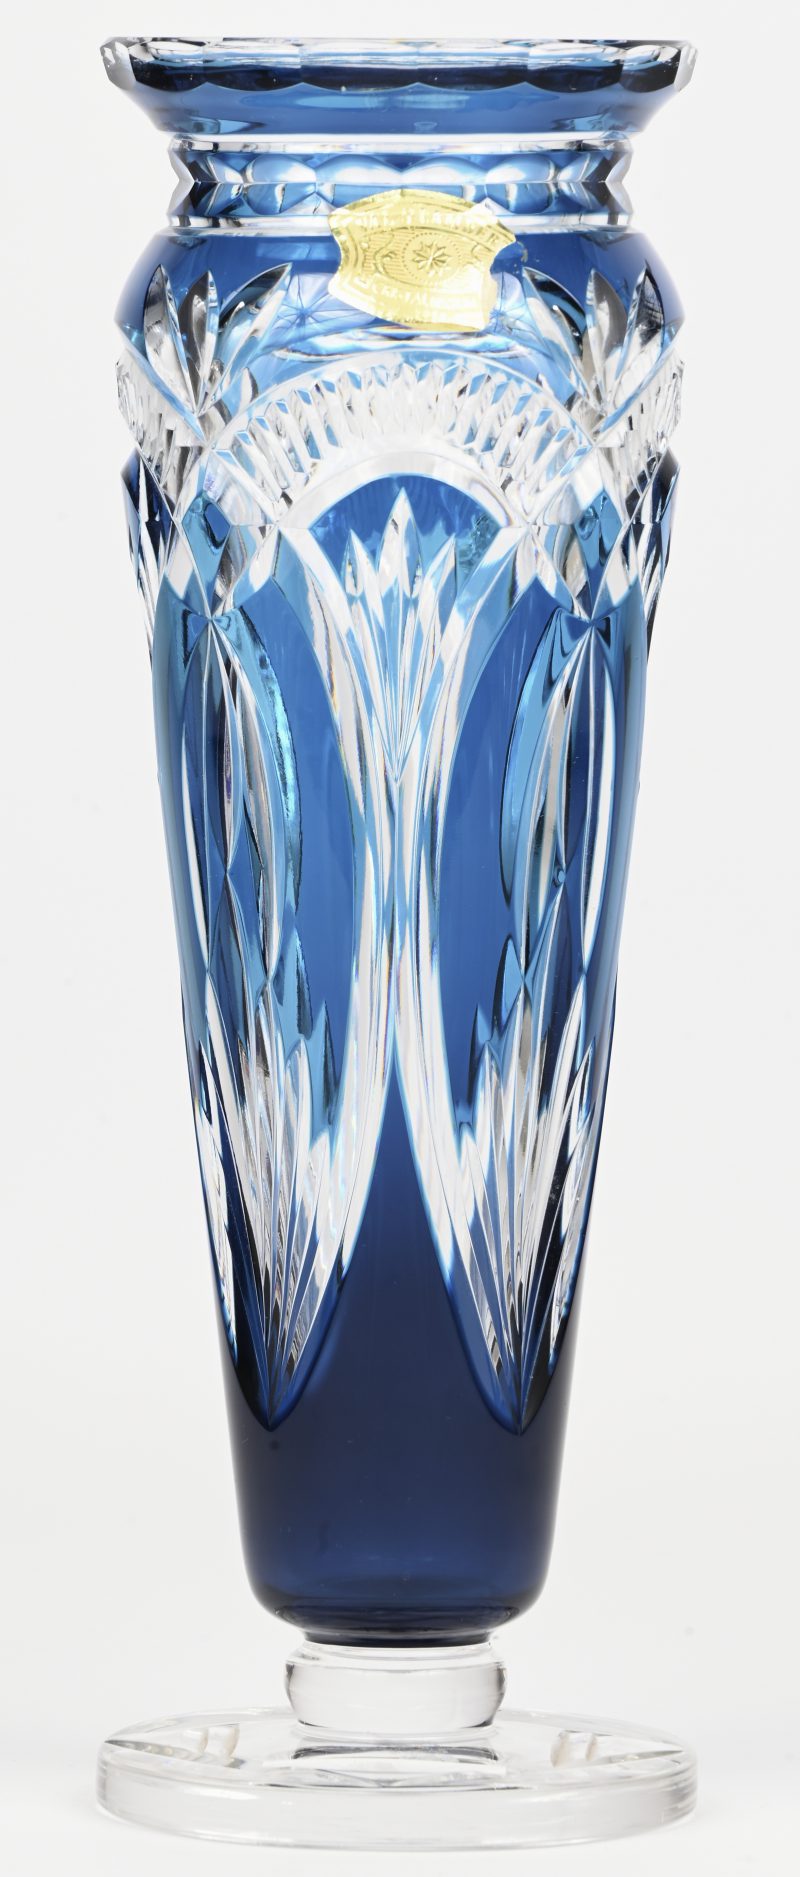 Een Val Saint Lambert vaas, petrol-blauw en kleurloos kristal, gesigneerd.